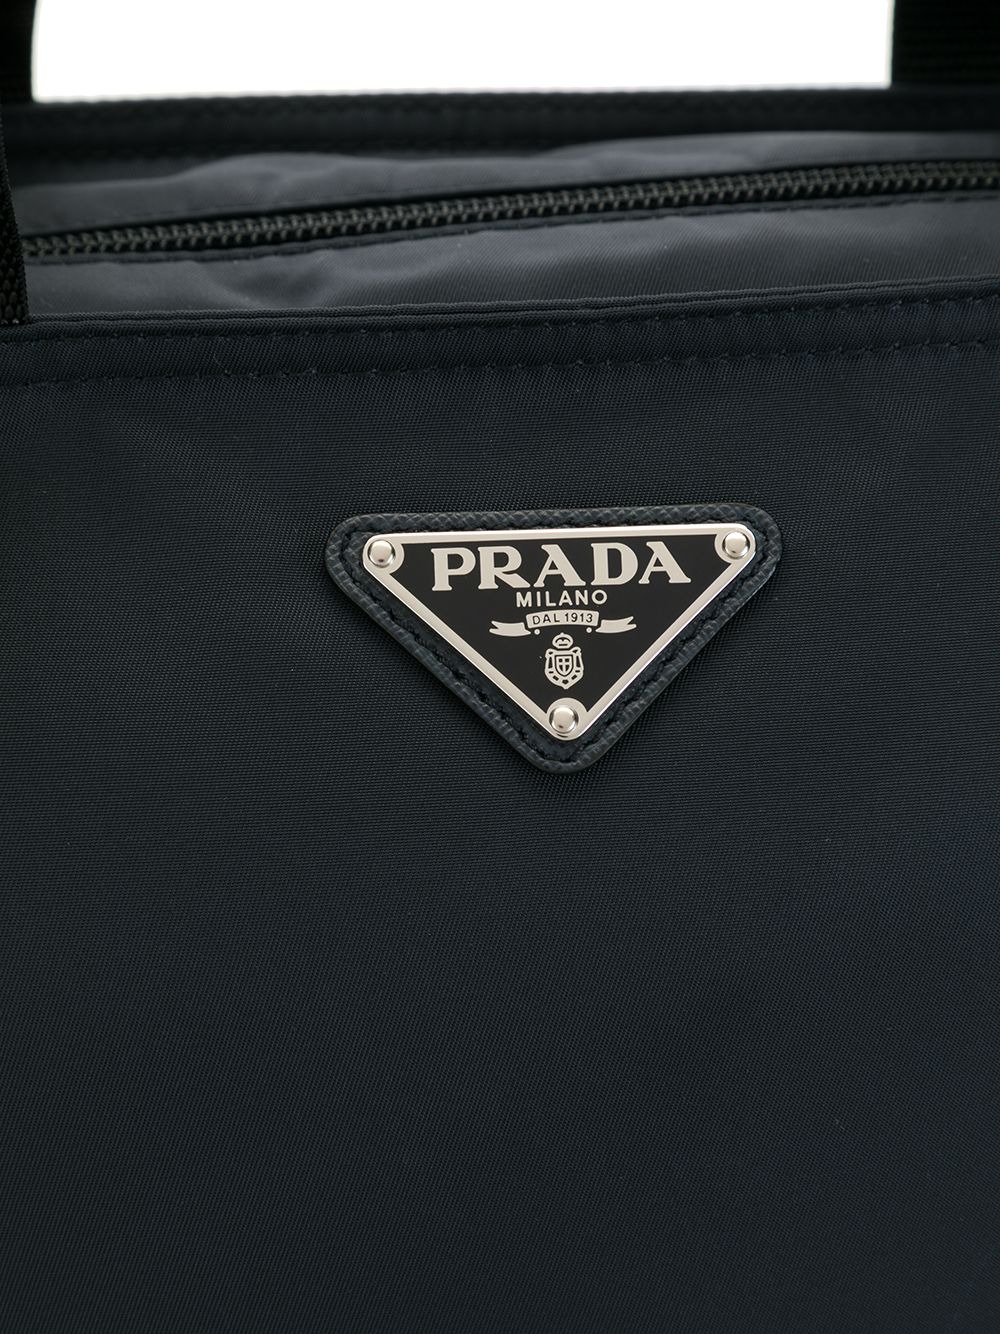 фото Prada pre-owned сумка с ремнем и ручками